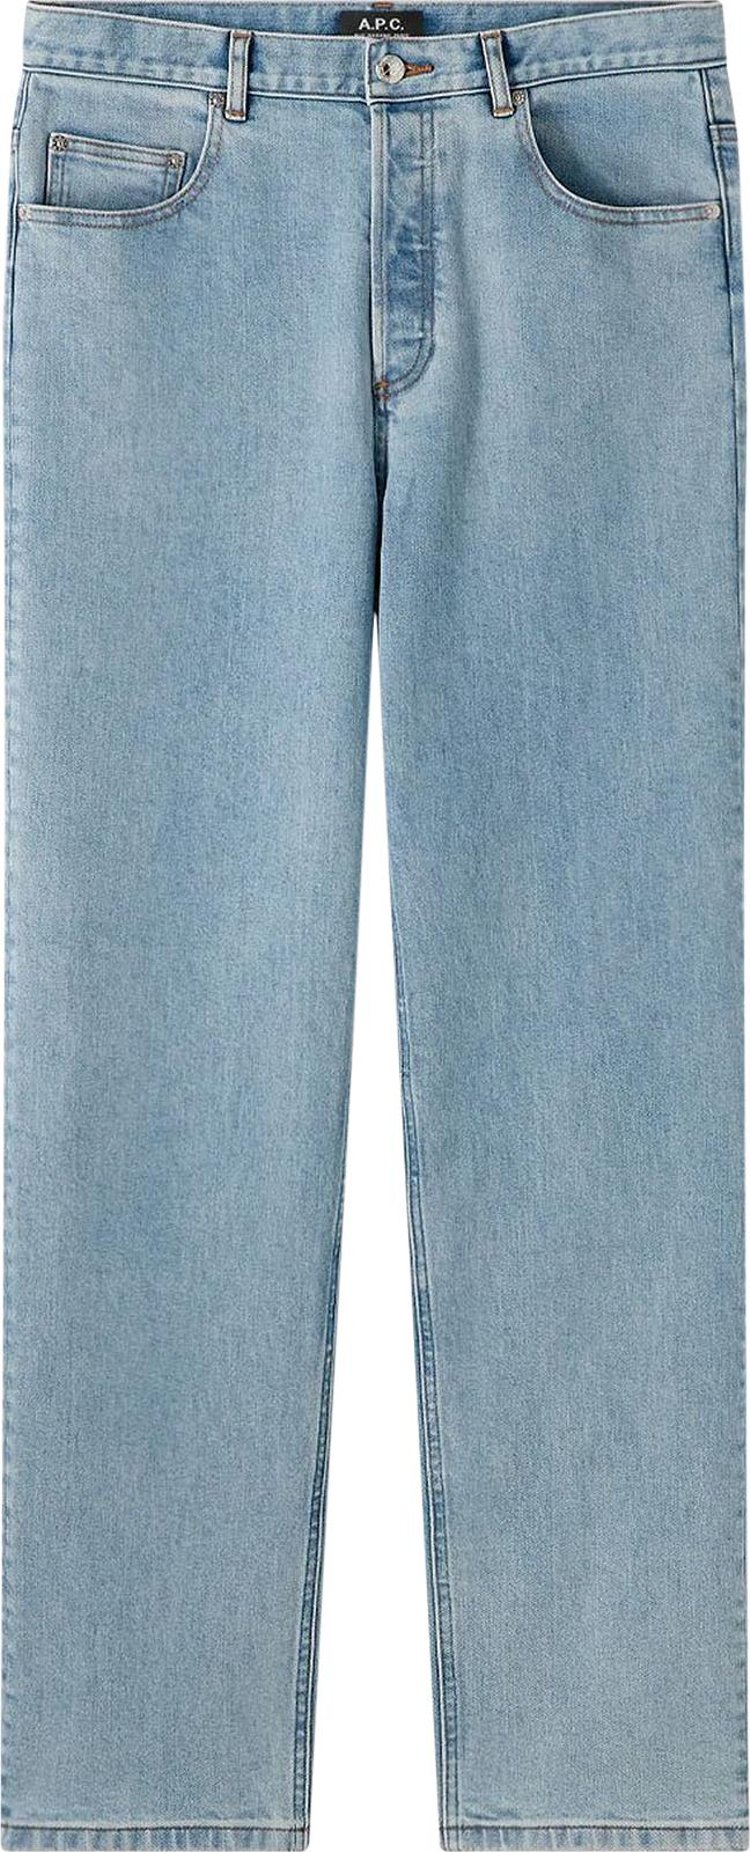 A.P.C. Fairfax Jeans 'Washed Indigo'